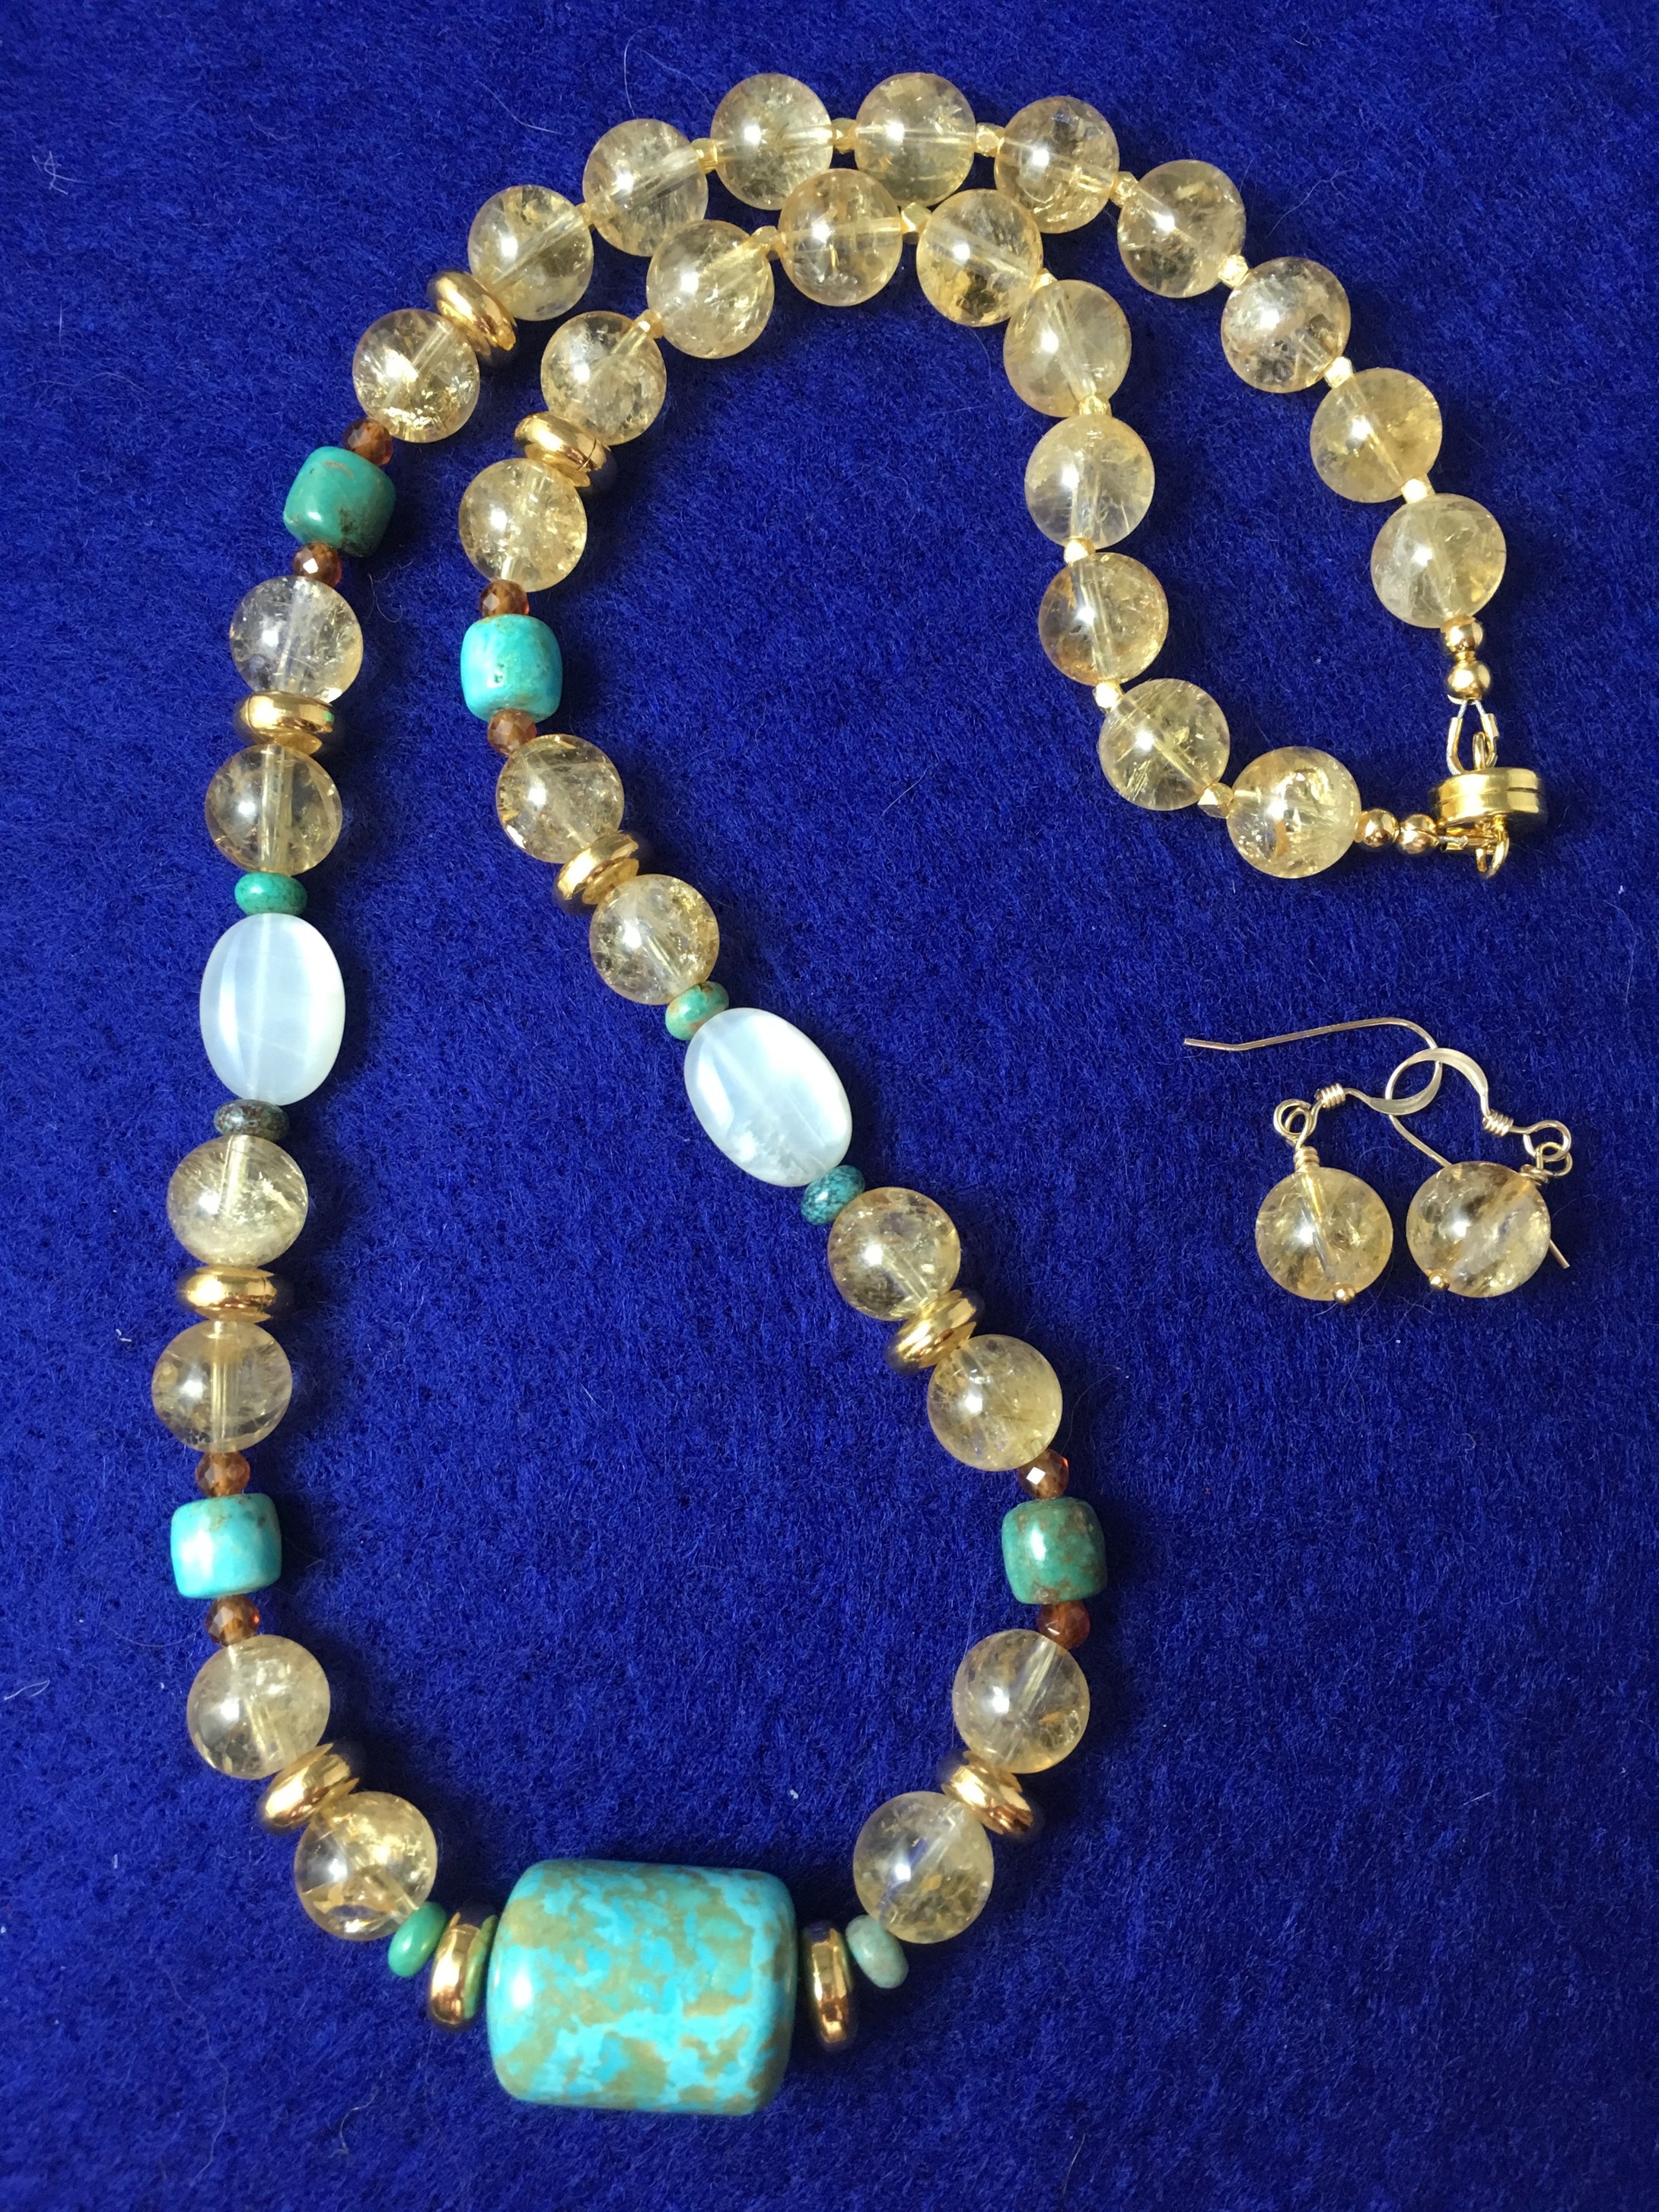 Citrine, Turquoise, White Moonstone, Hessonite, Plated Gold.  19 3/4